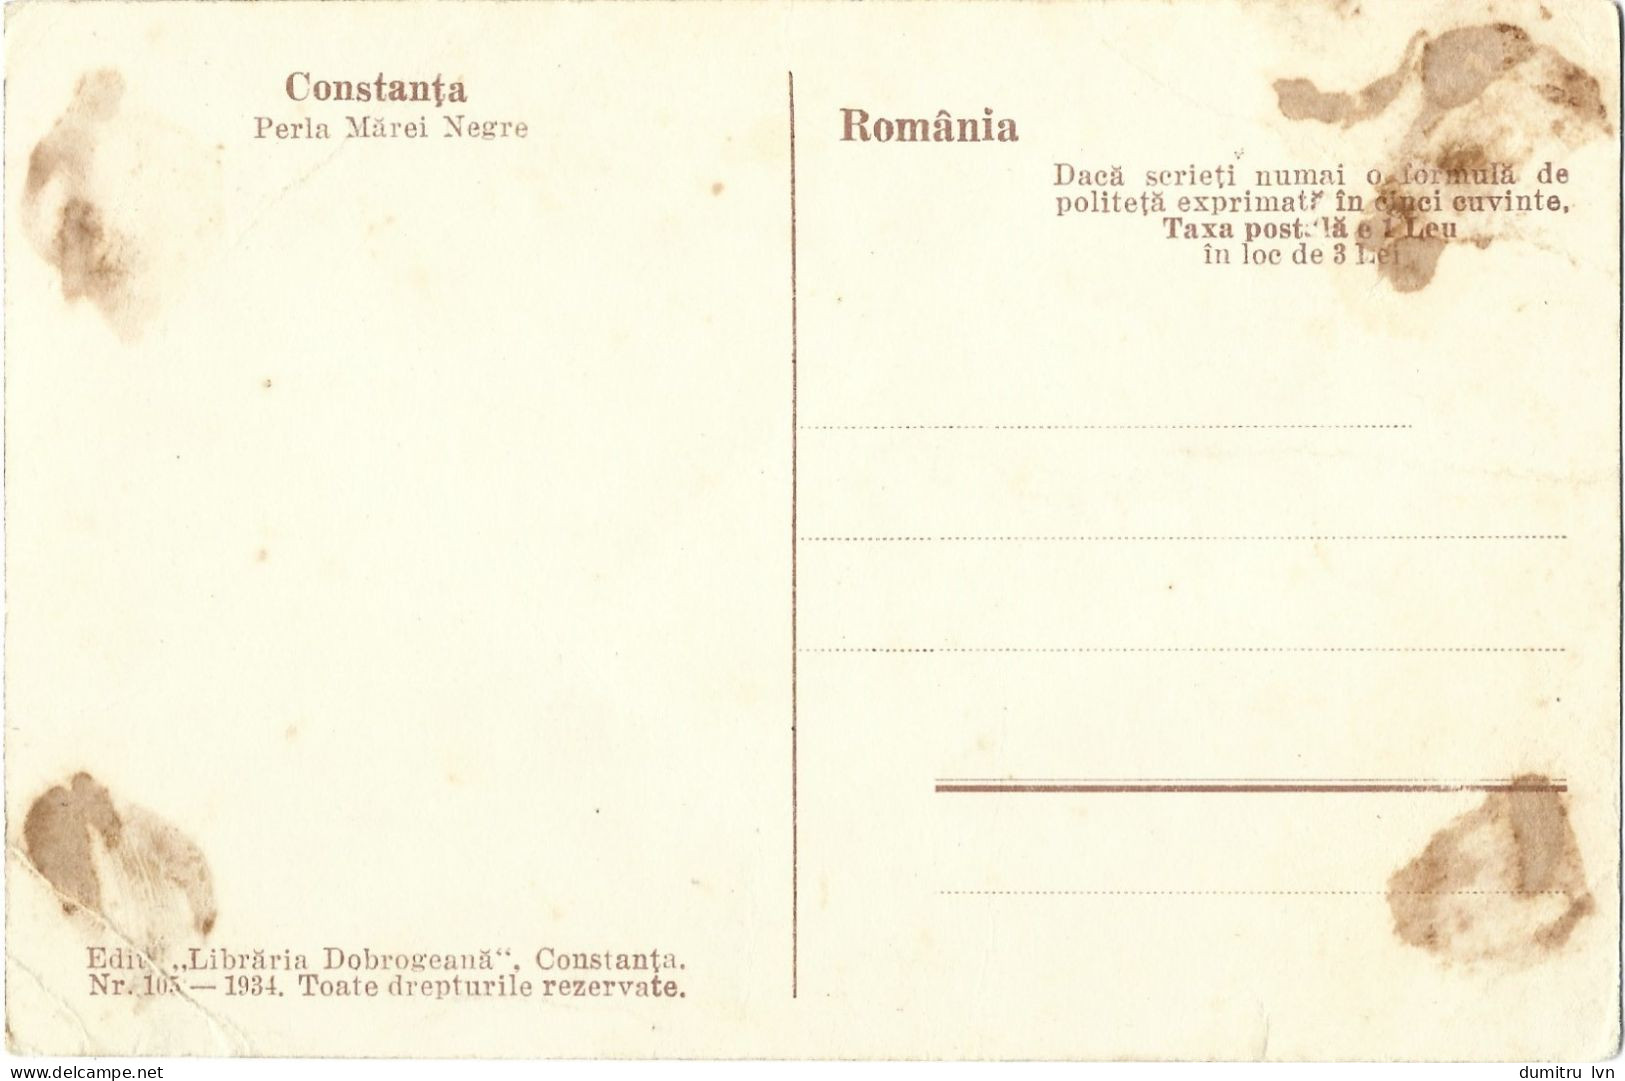 ROMANIA 1934 CONSTANTA - GENERAL VIEW OF CERNAVODA BRIDGE, THE DANUBE RIVER, ARCHITECTURE, PEOPLE - Roumanie